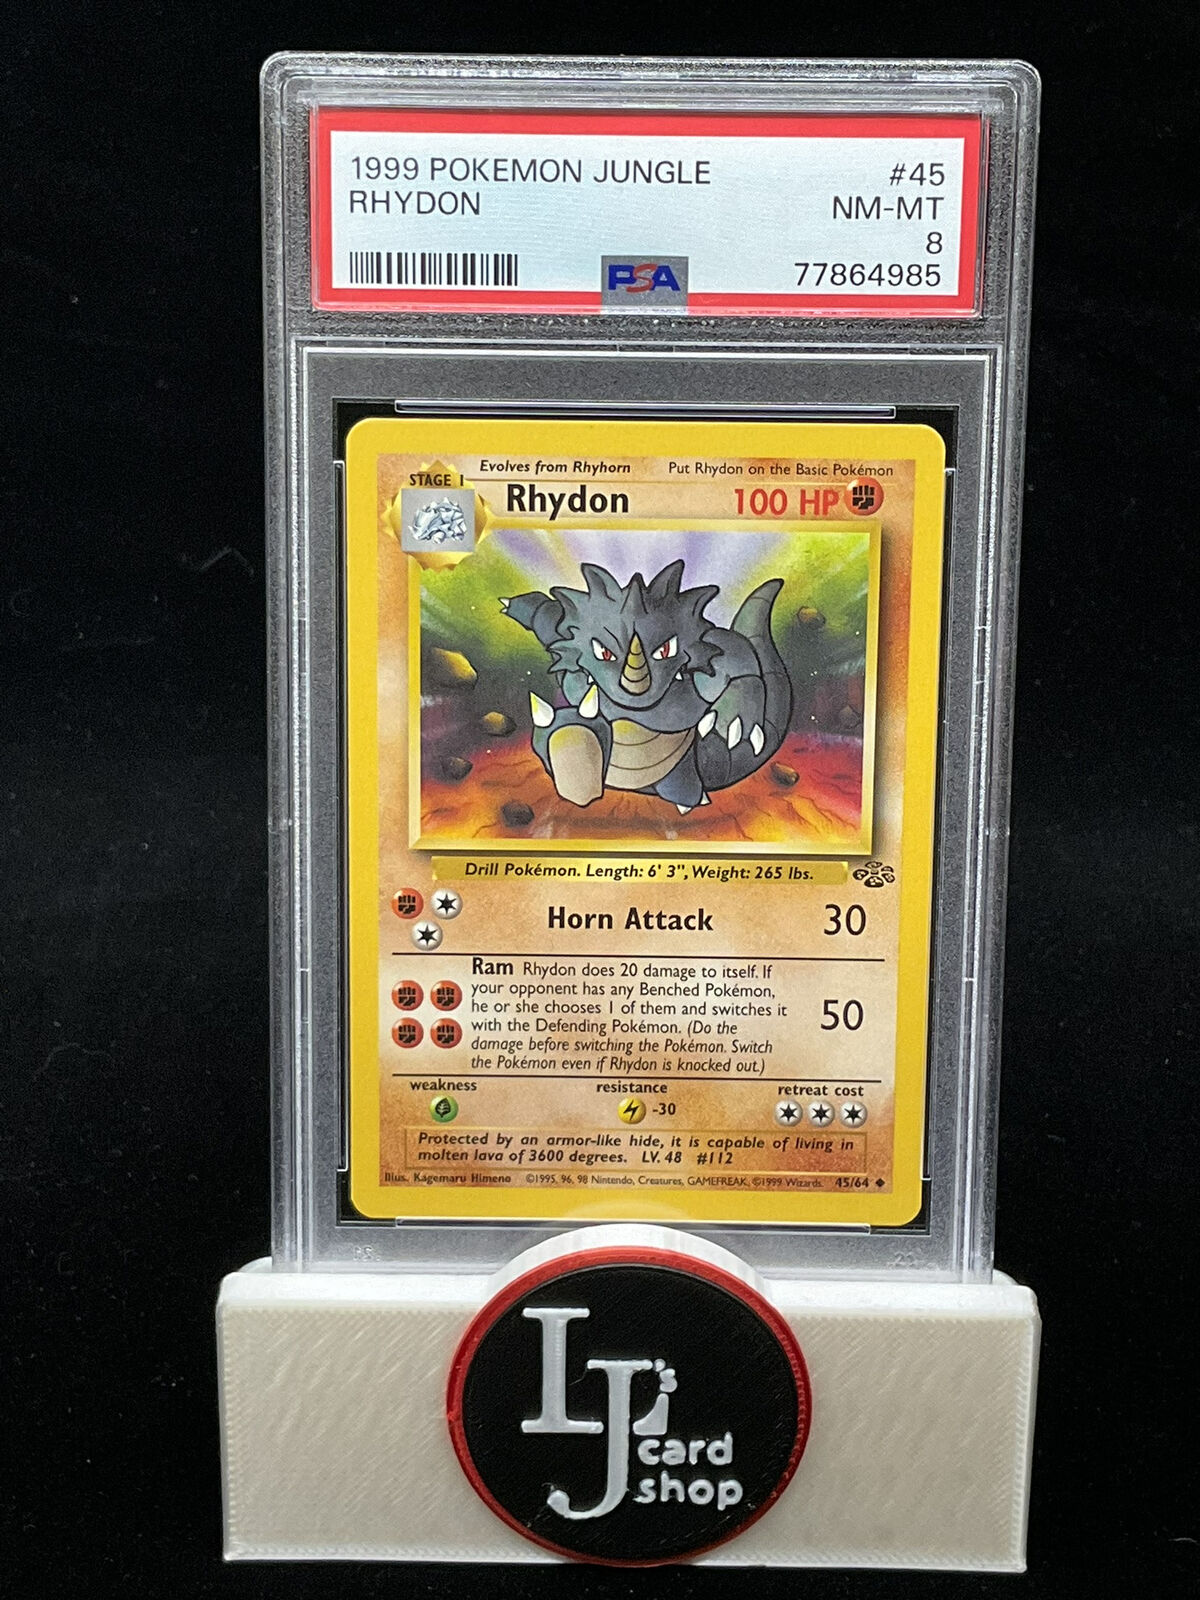 1999 Pokémon Jungle Rhydon #45 PSA 8 NM-MT 4985 CJC